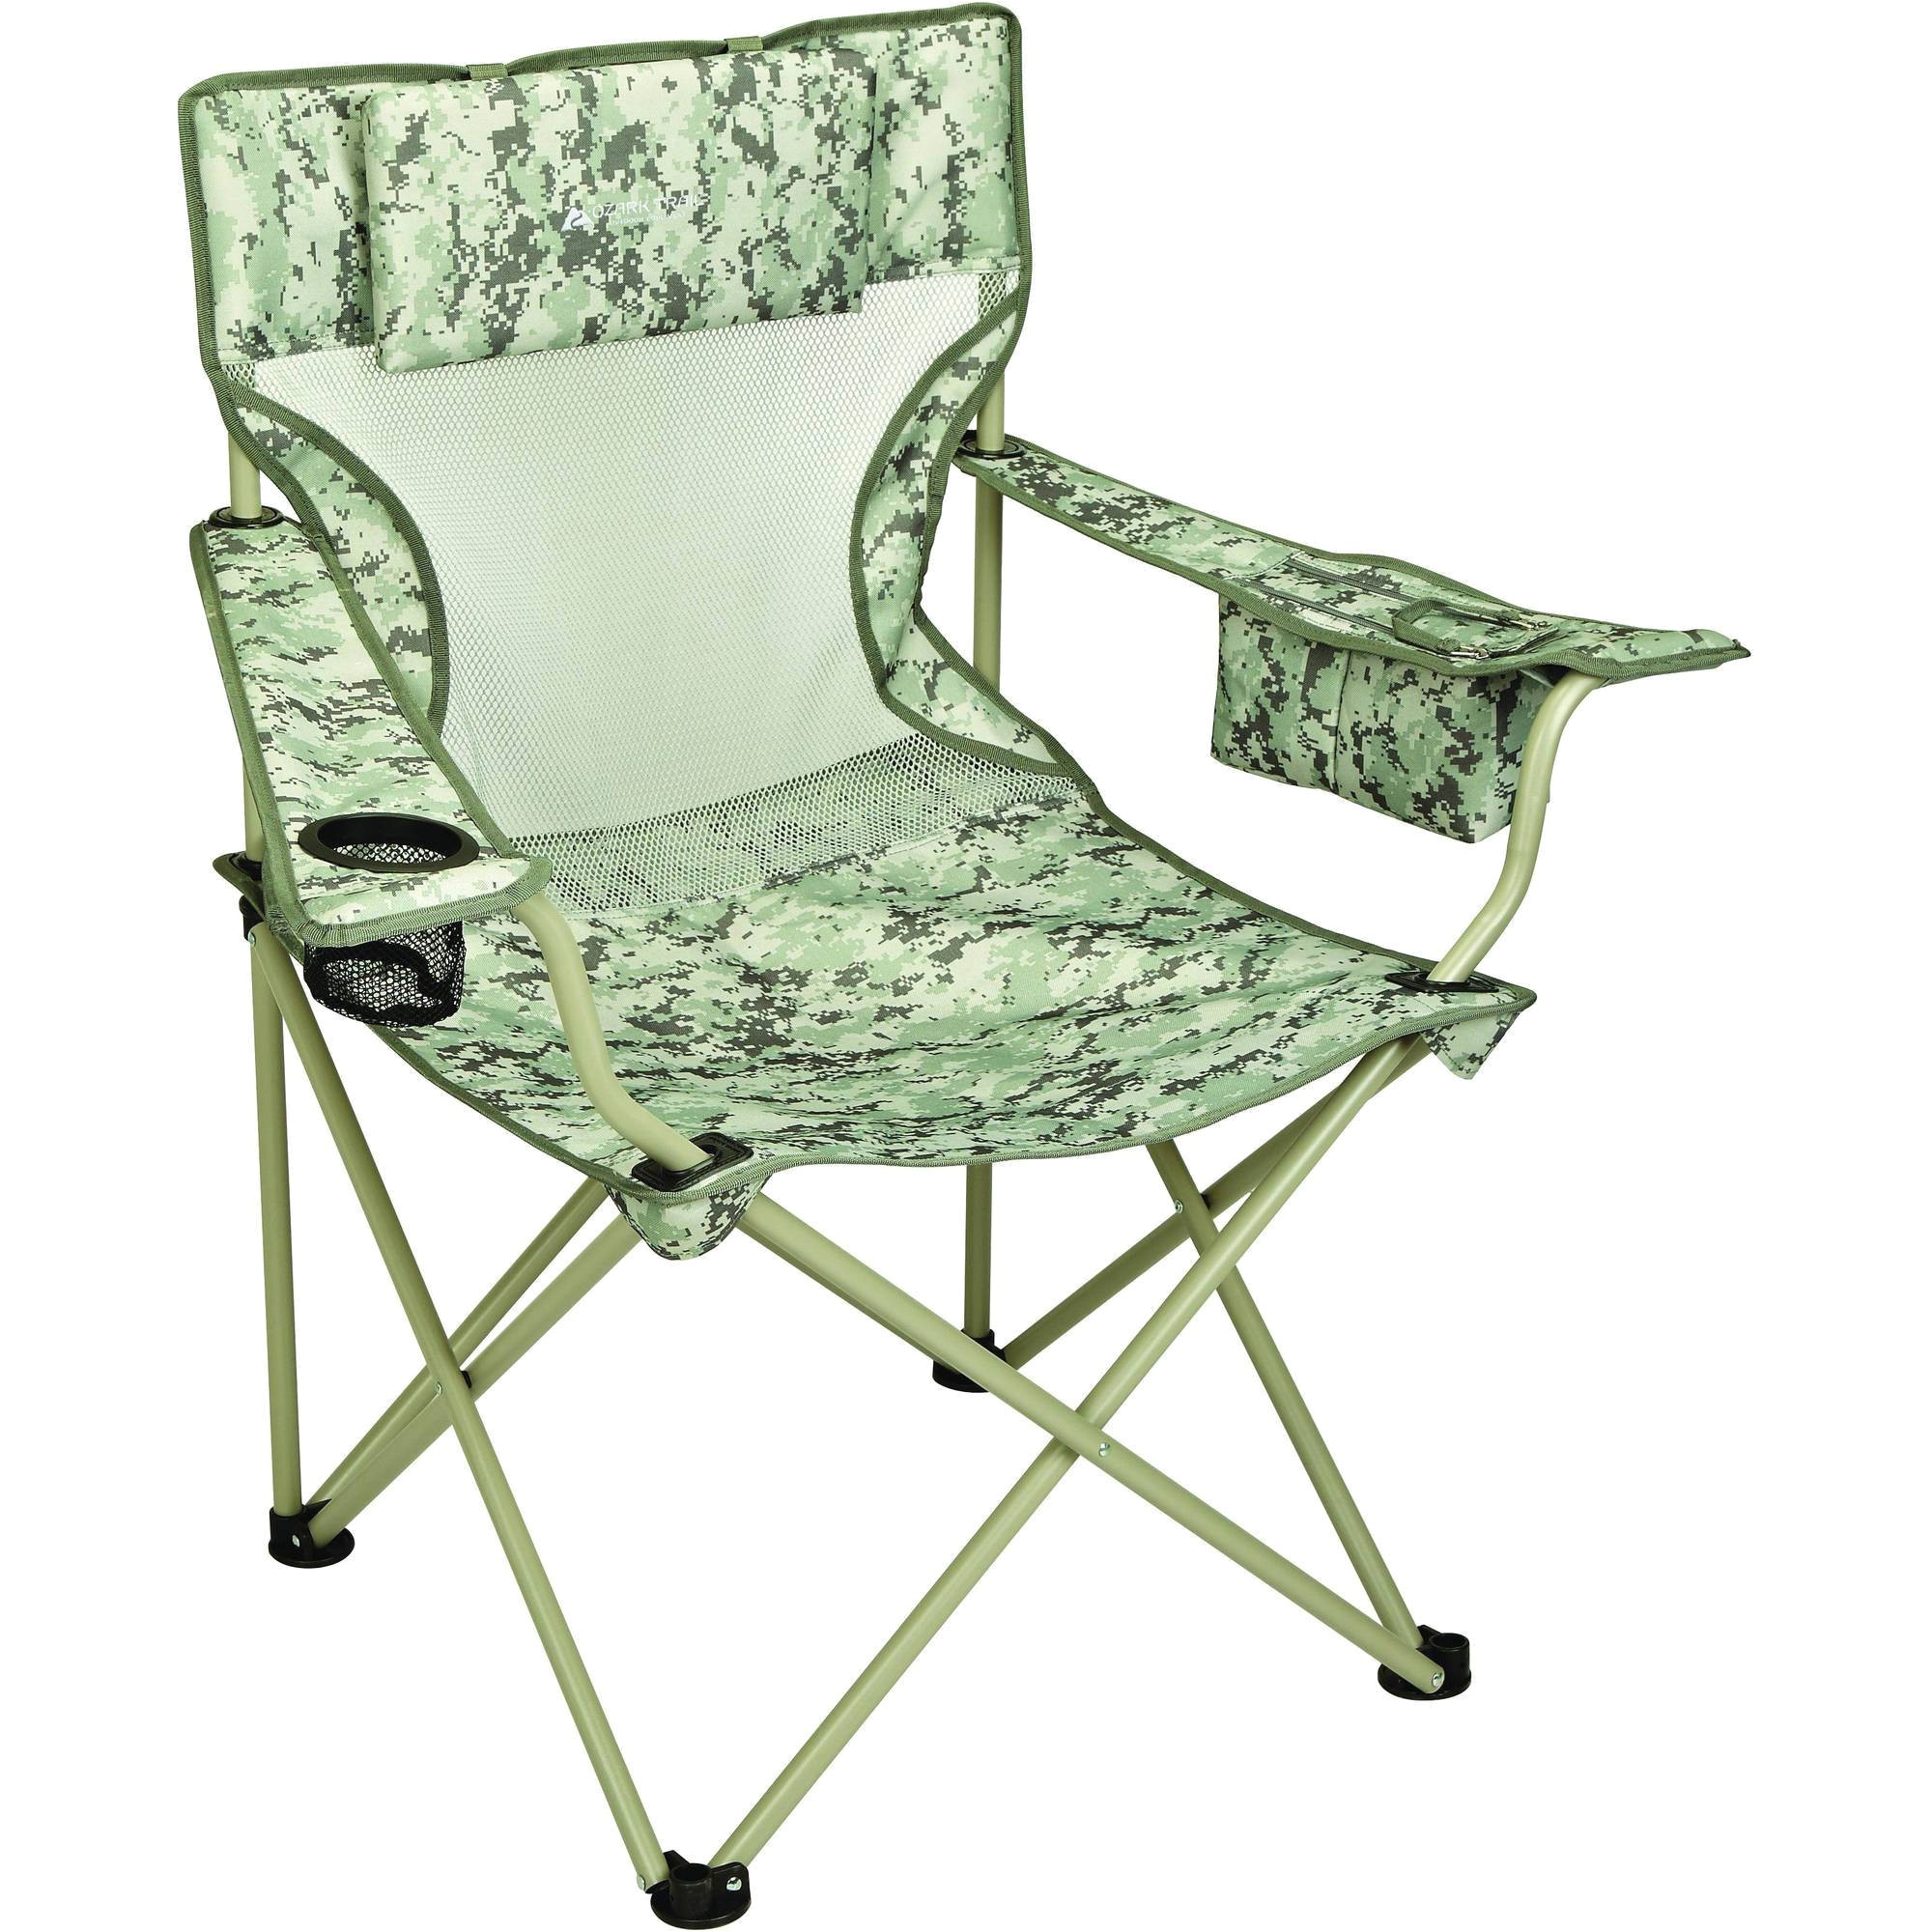 Best Stadium Chairs for Bleachers Best Stadium Chairs New 30 the Best Outdoor Lounge Chairs Walmart